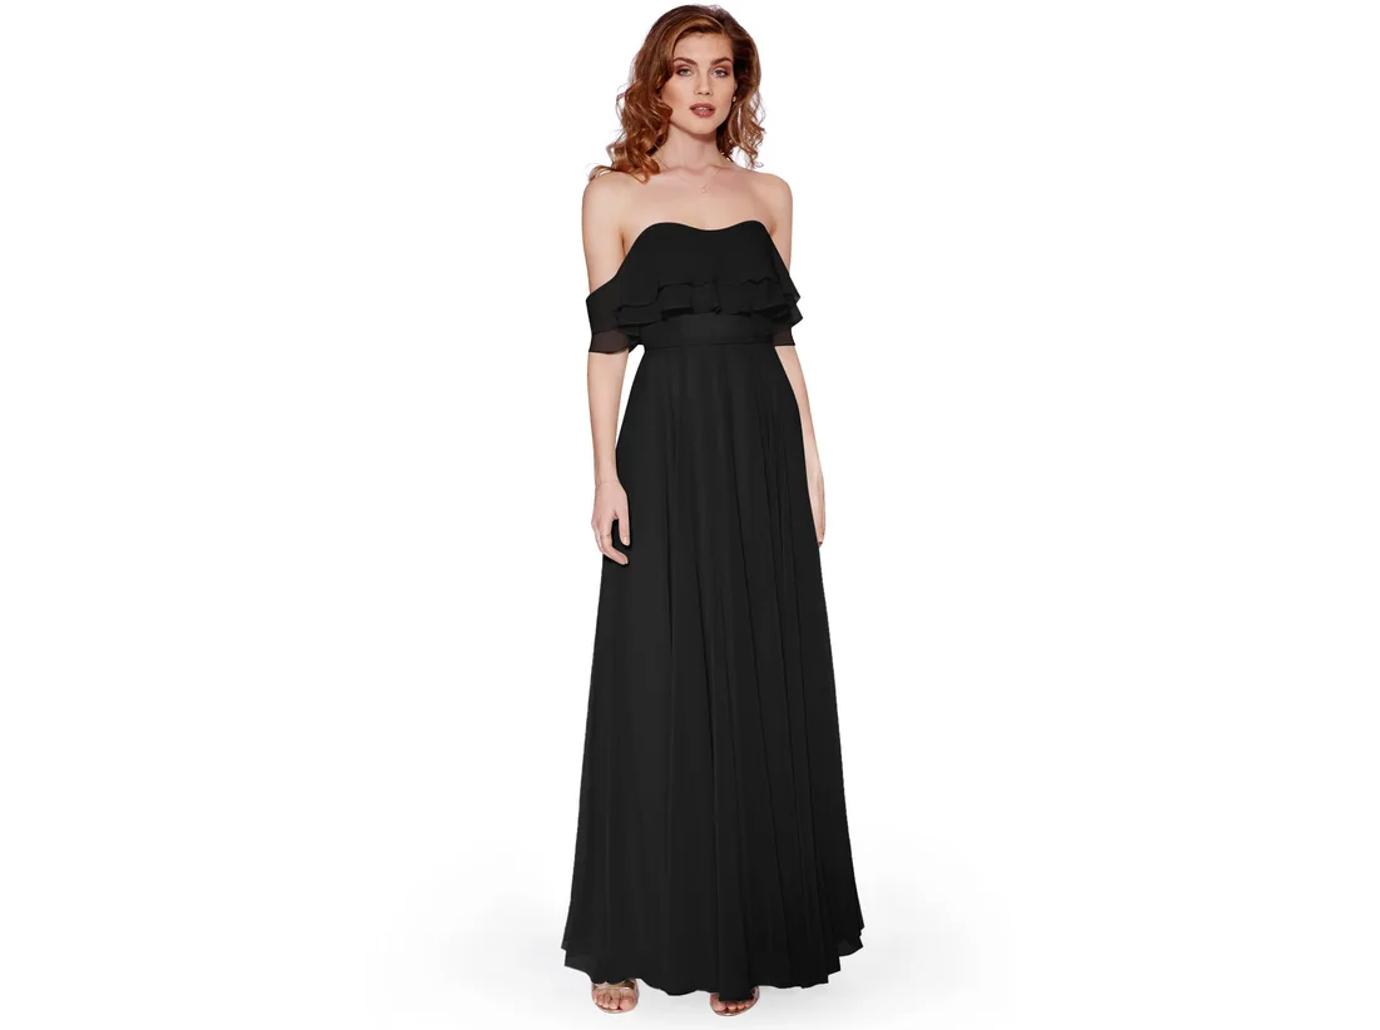 Hilton, Strapless Tailored Dress in Black